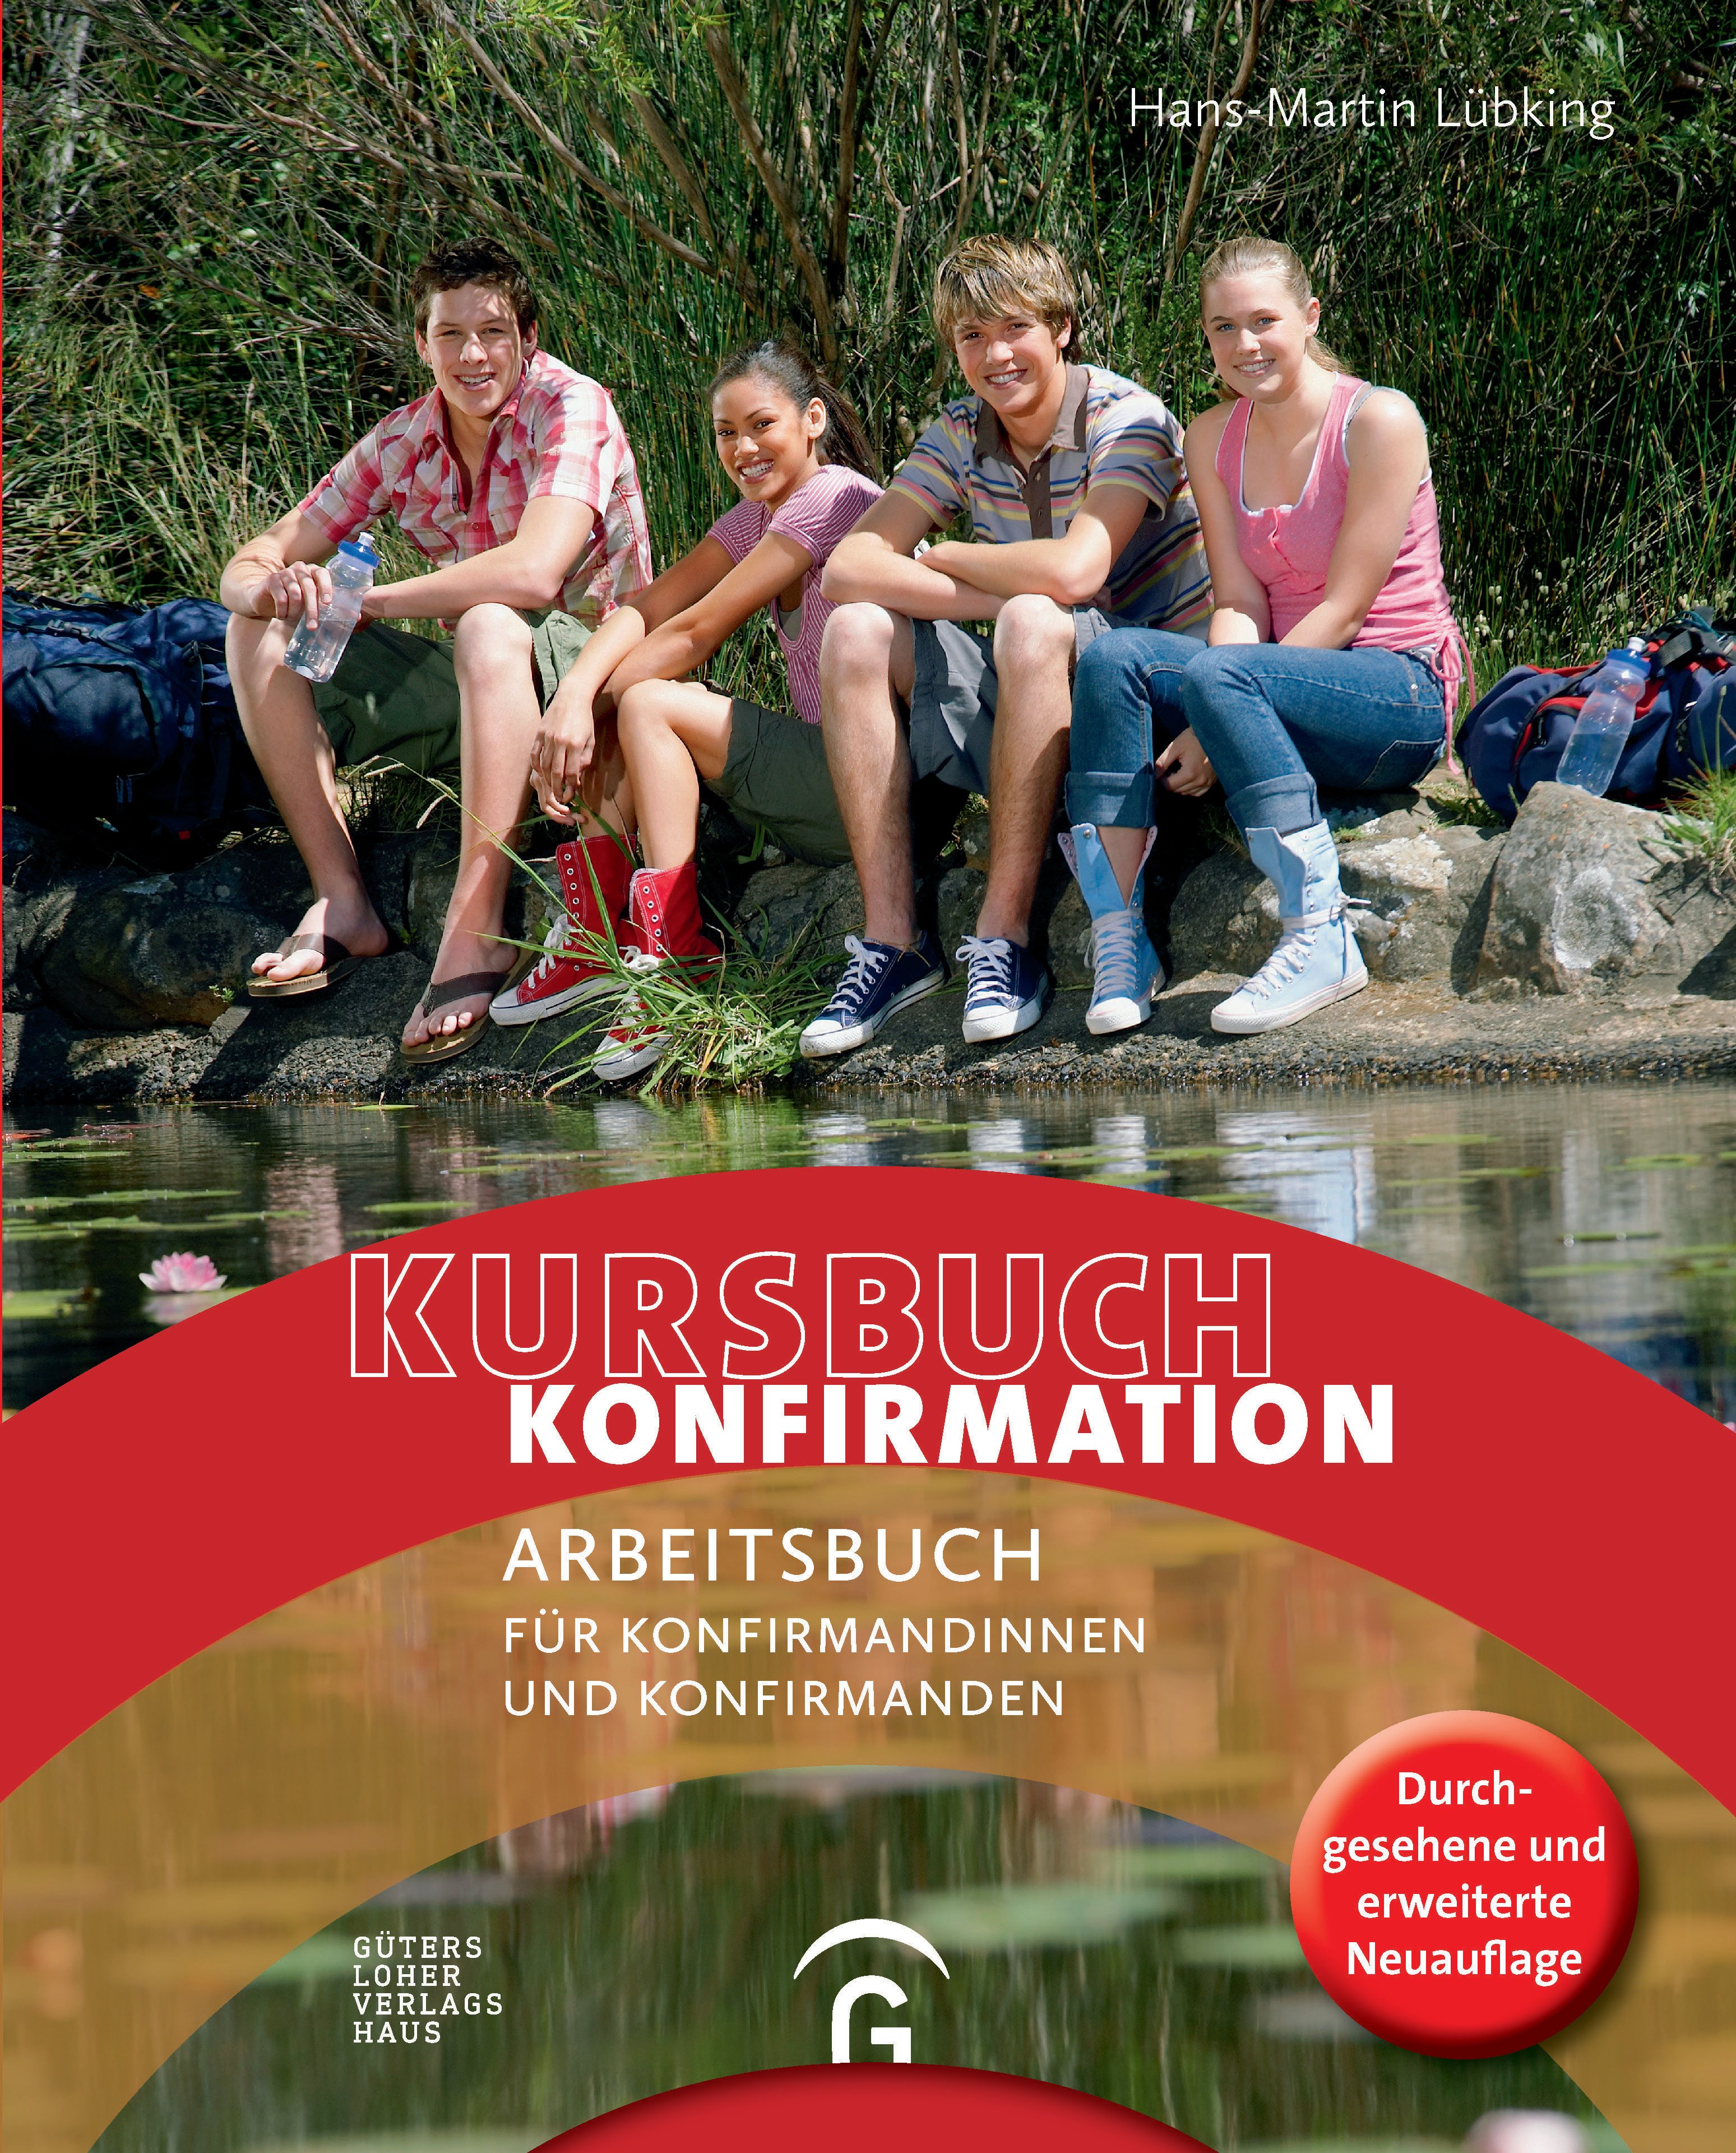 Kursbuch Konfirmation - Ringbuchausgabe - Cover